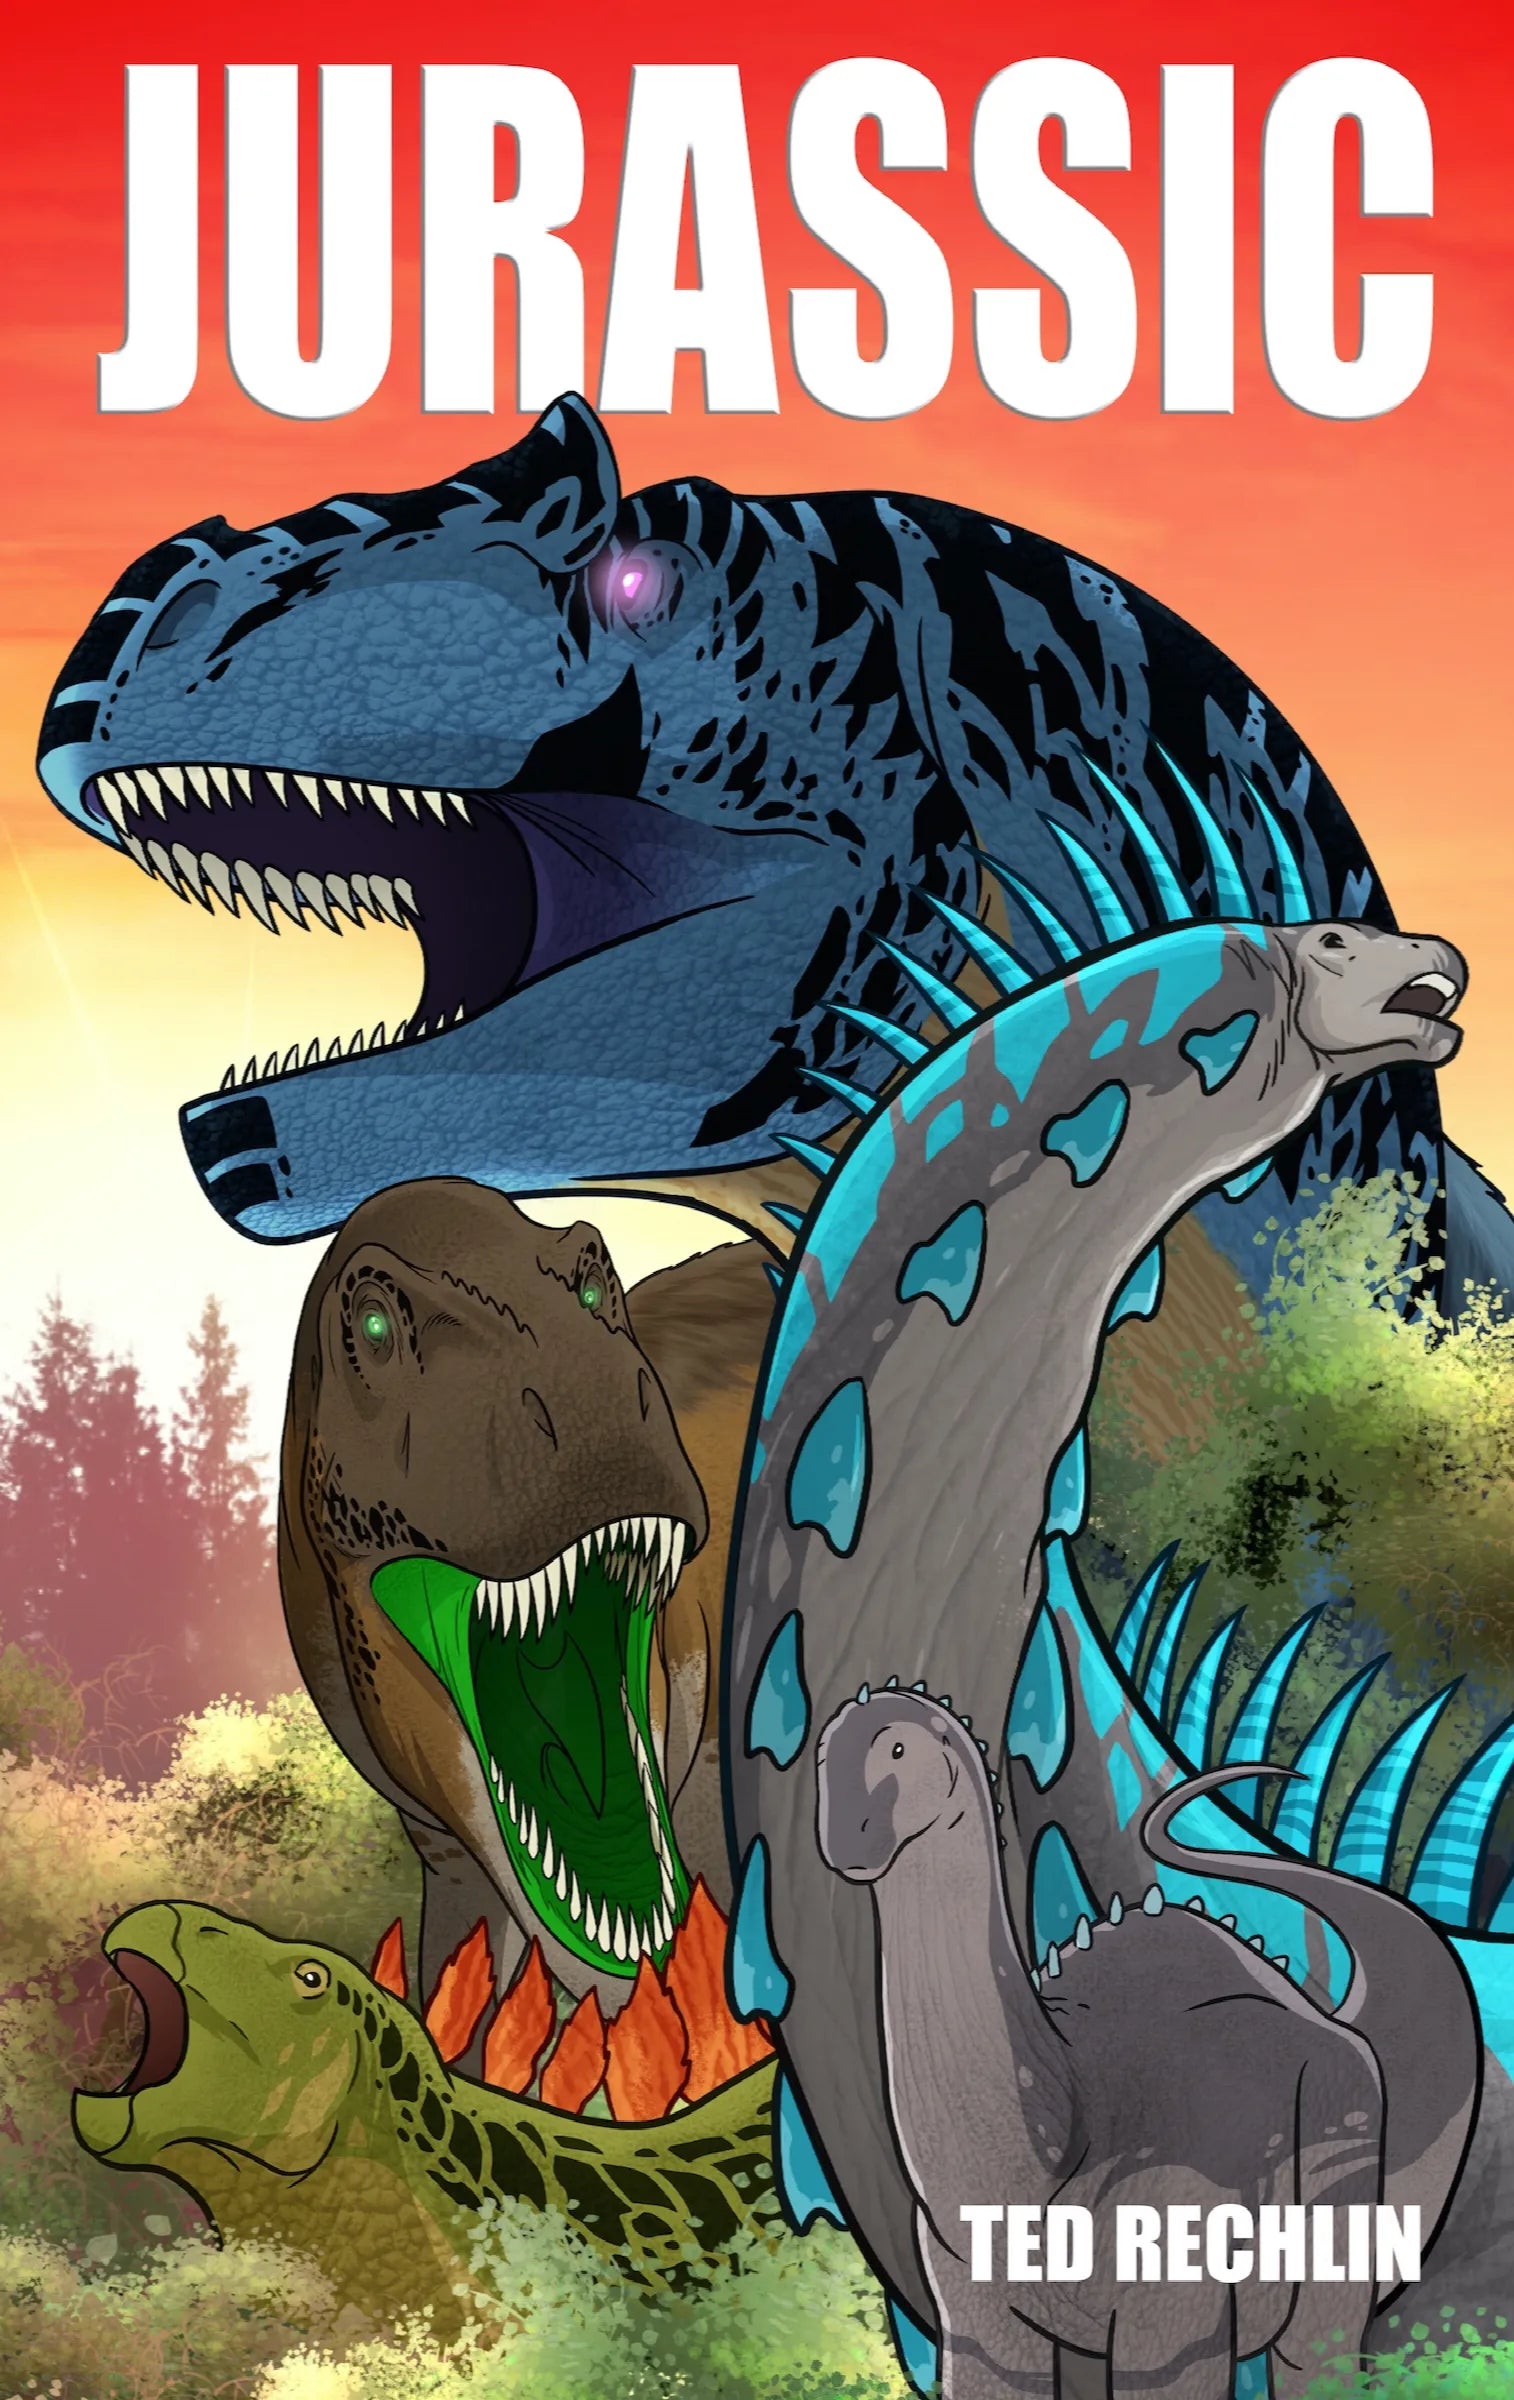 Jurassic, a Graphic Novel